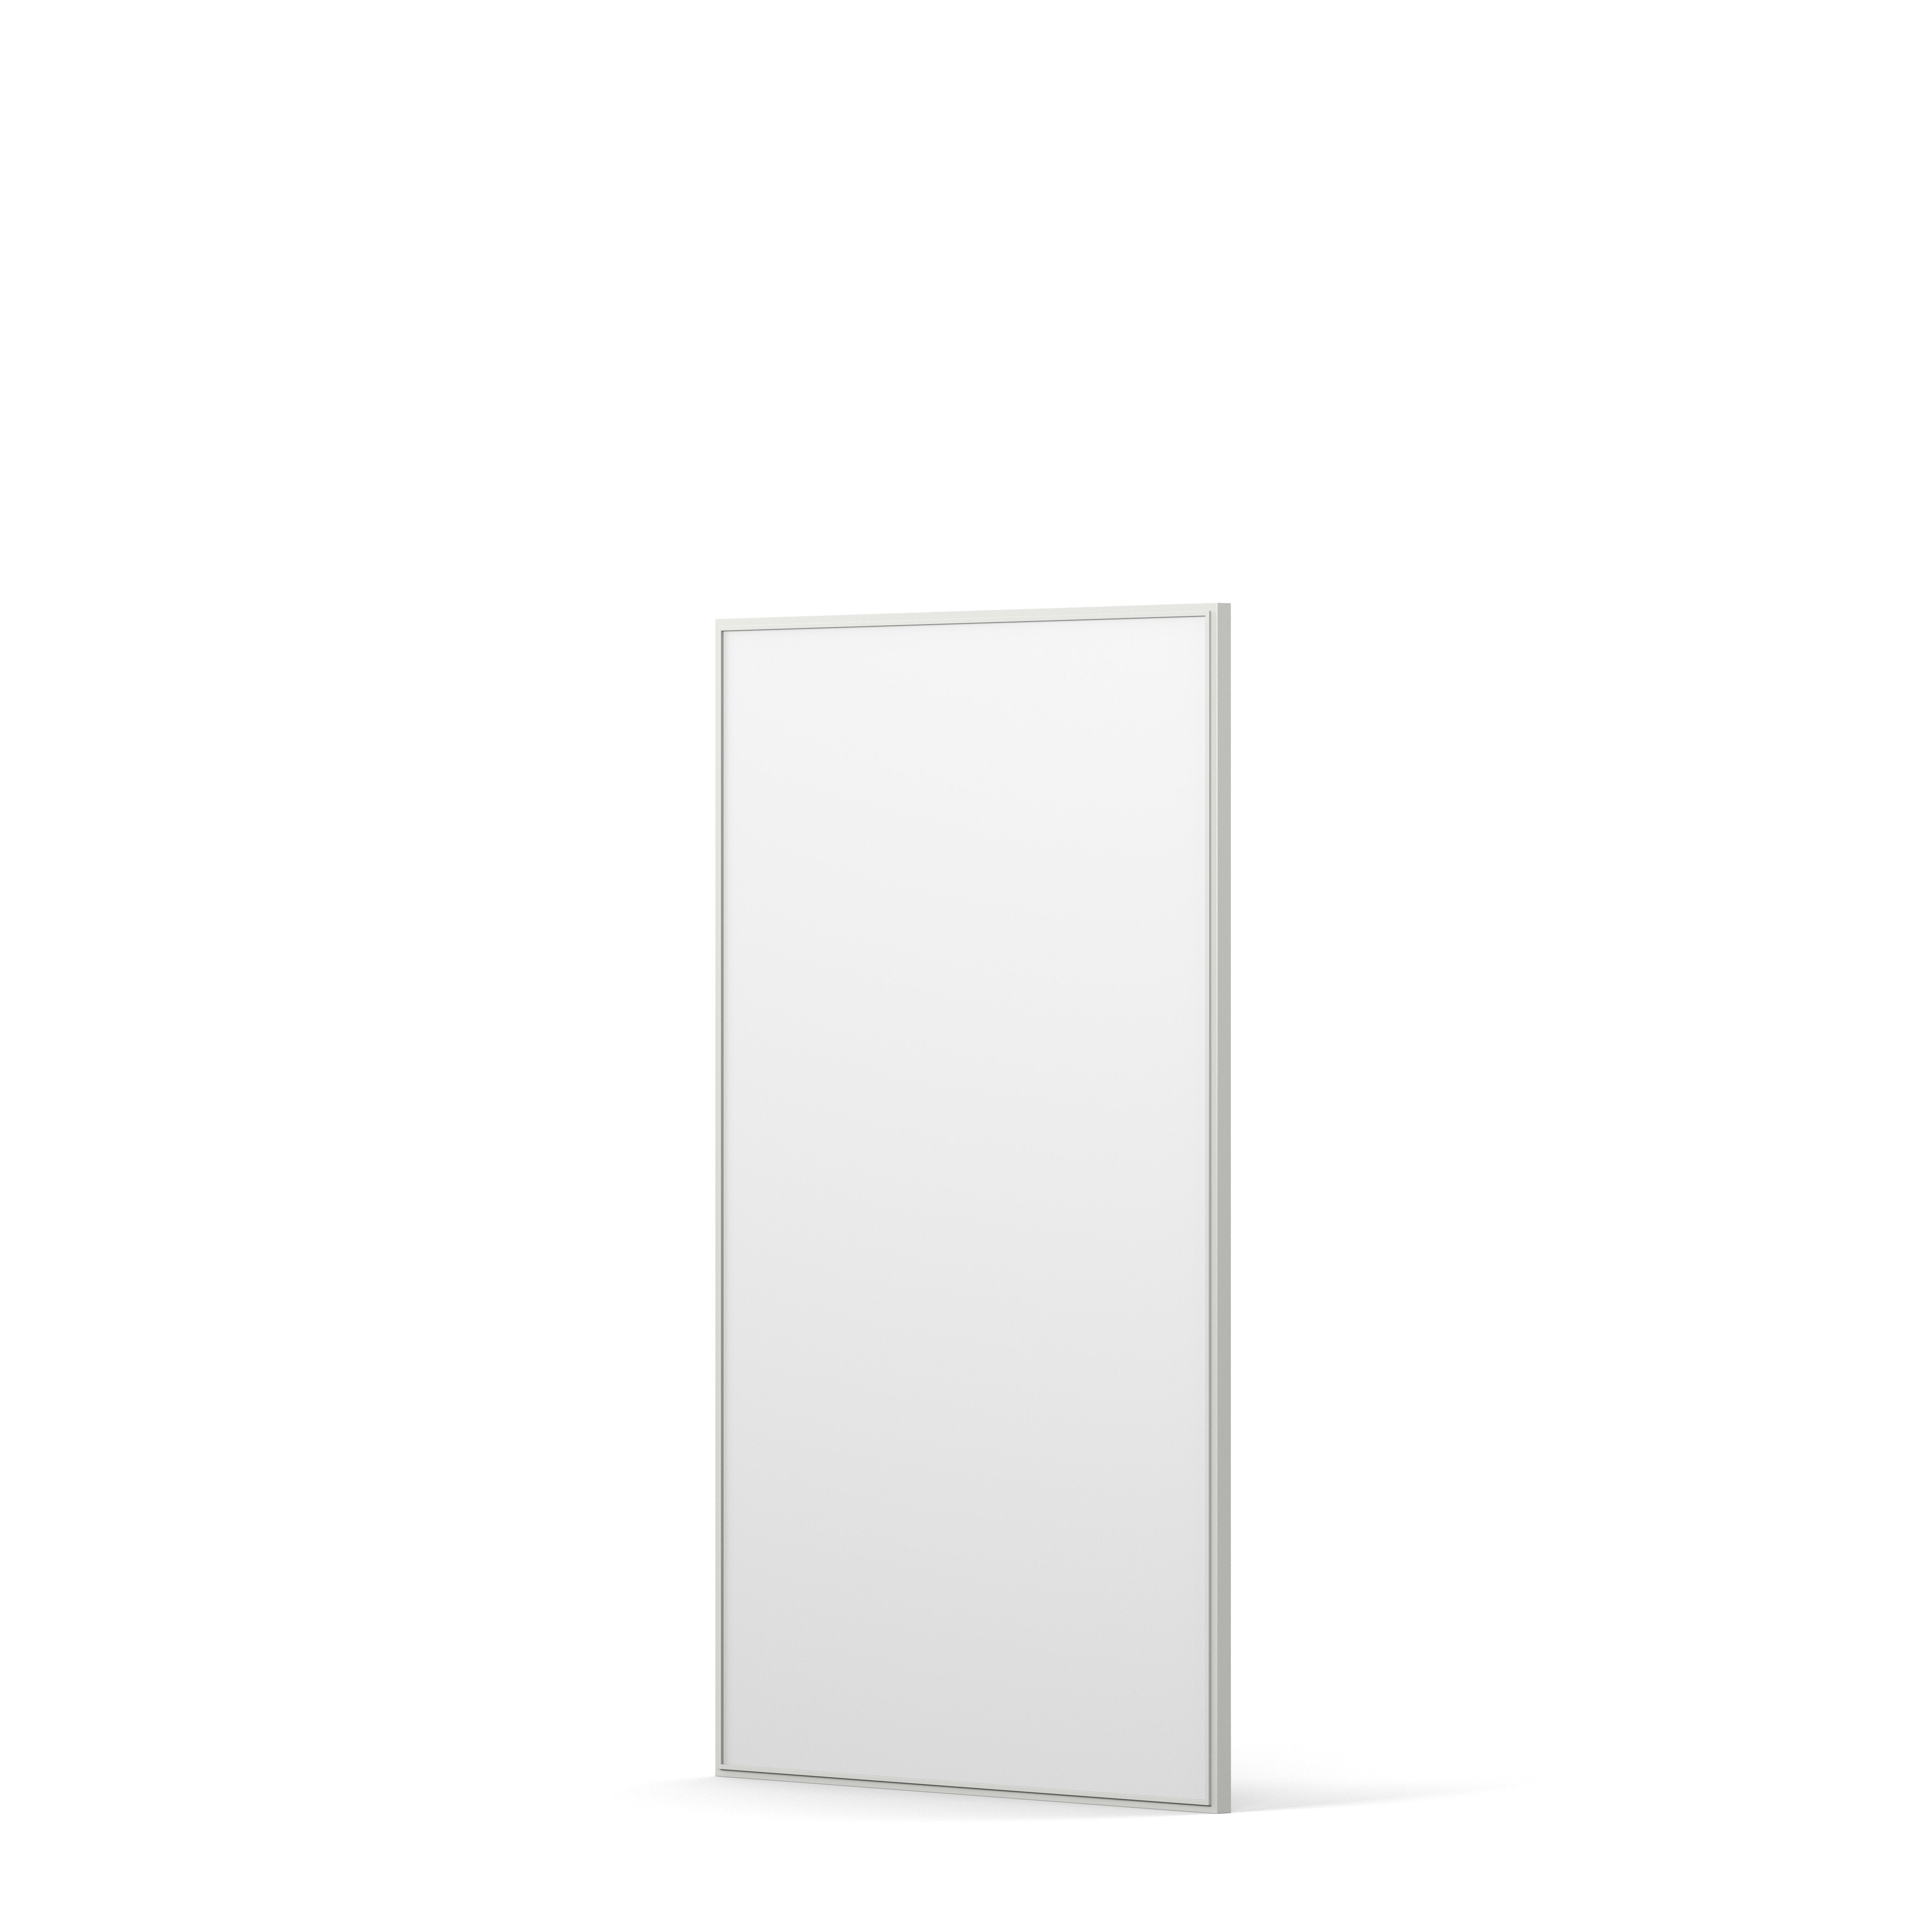 Englesson Cube Spegel Rektangulär #färg_Edge White #Colour_Edge White